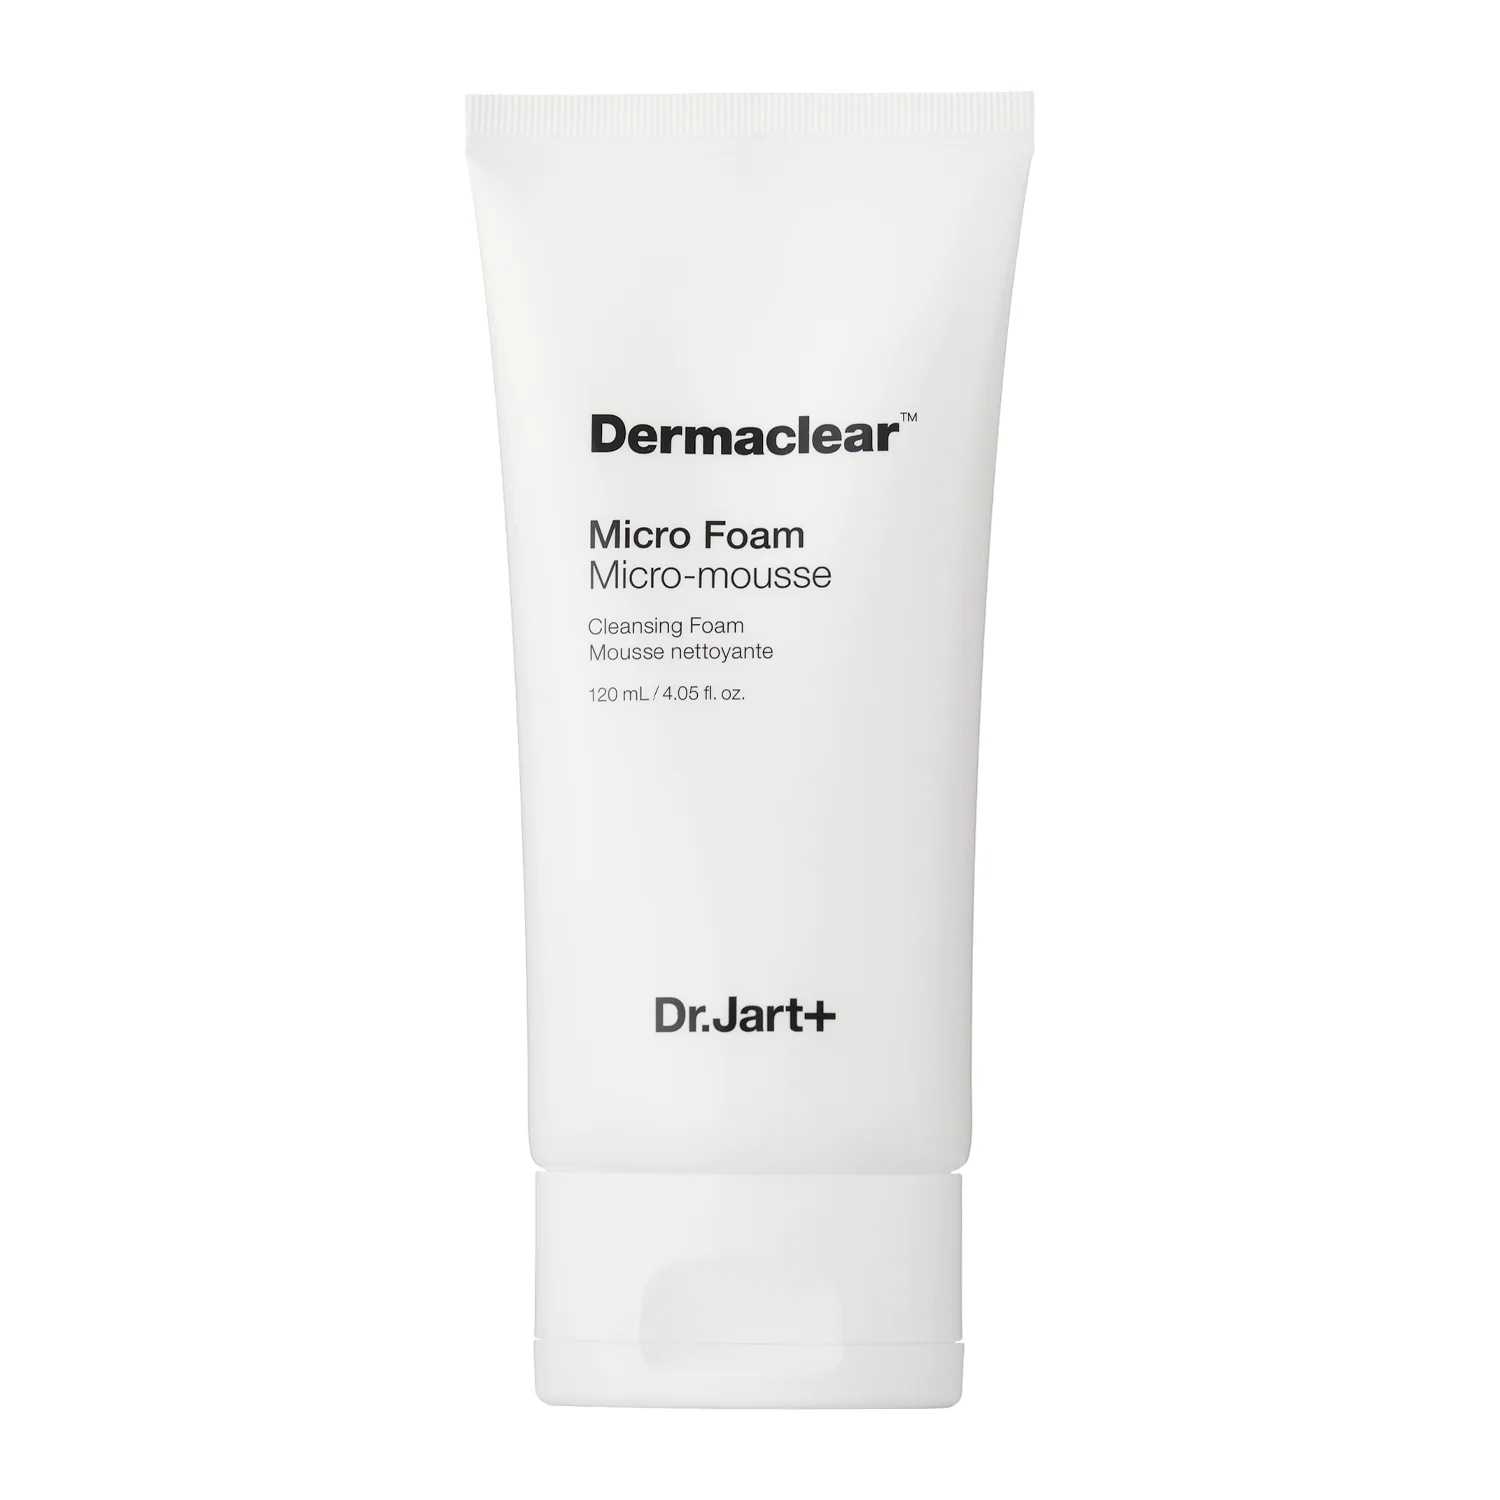 Dr. Jart+ - Пенка для умывания - Dermaclear Micro Foam Cleanser - 120ml